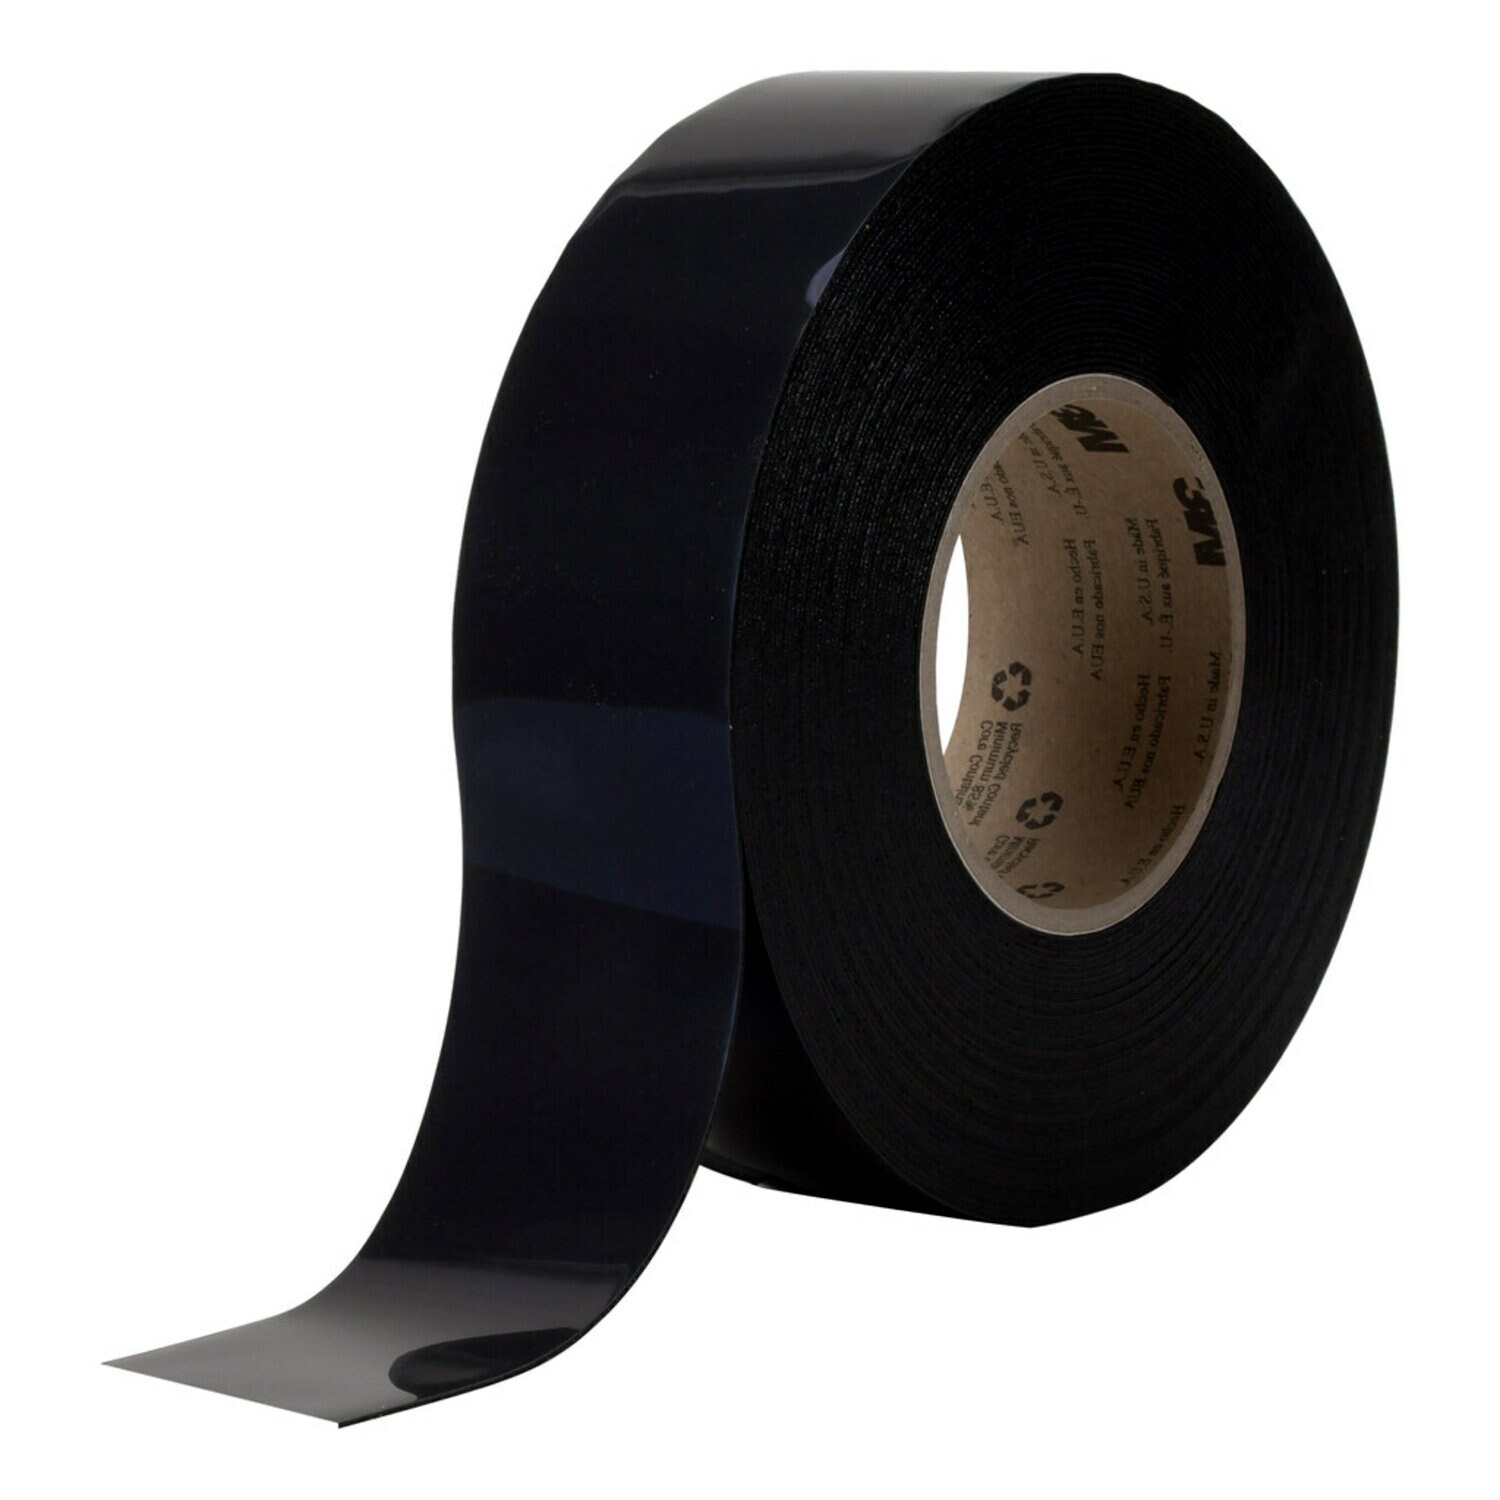 7010536029 - 3M Extreme Sealing Tape 4411B, Black, 1 1/2 in x 36 yd, 40 mil, 6 rolls
per case